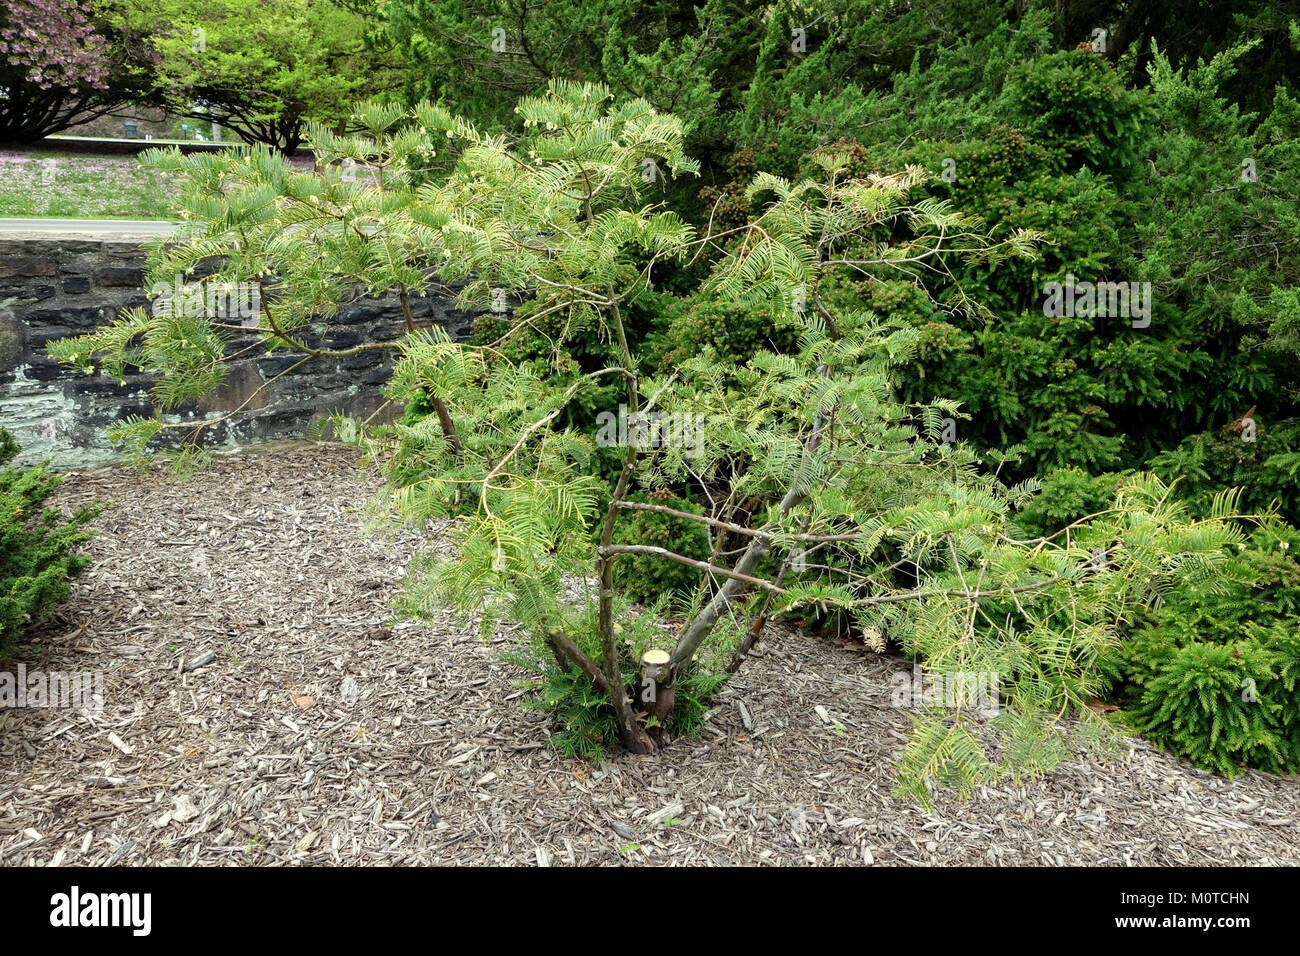 Cephalotaxus sinensis - Longwood Gardens - DSC00777 Stock Photo